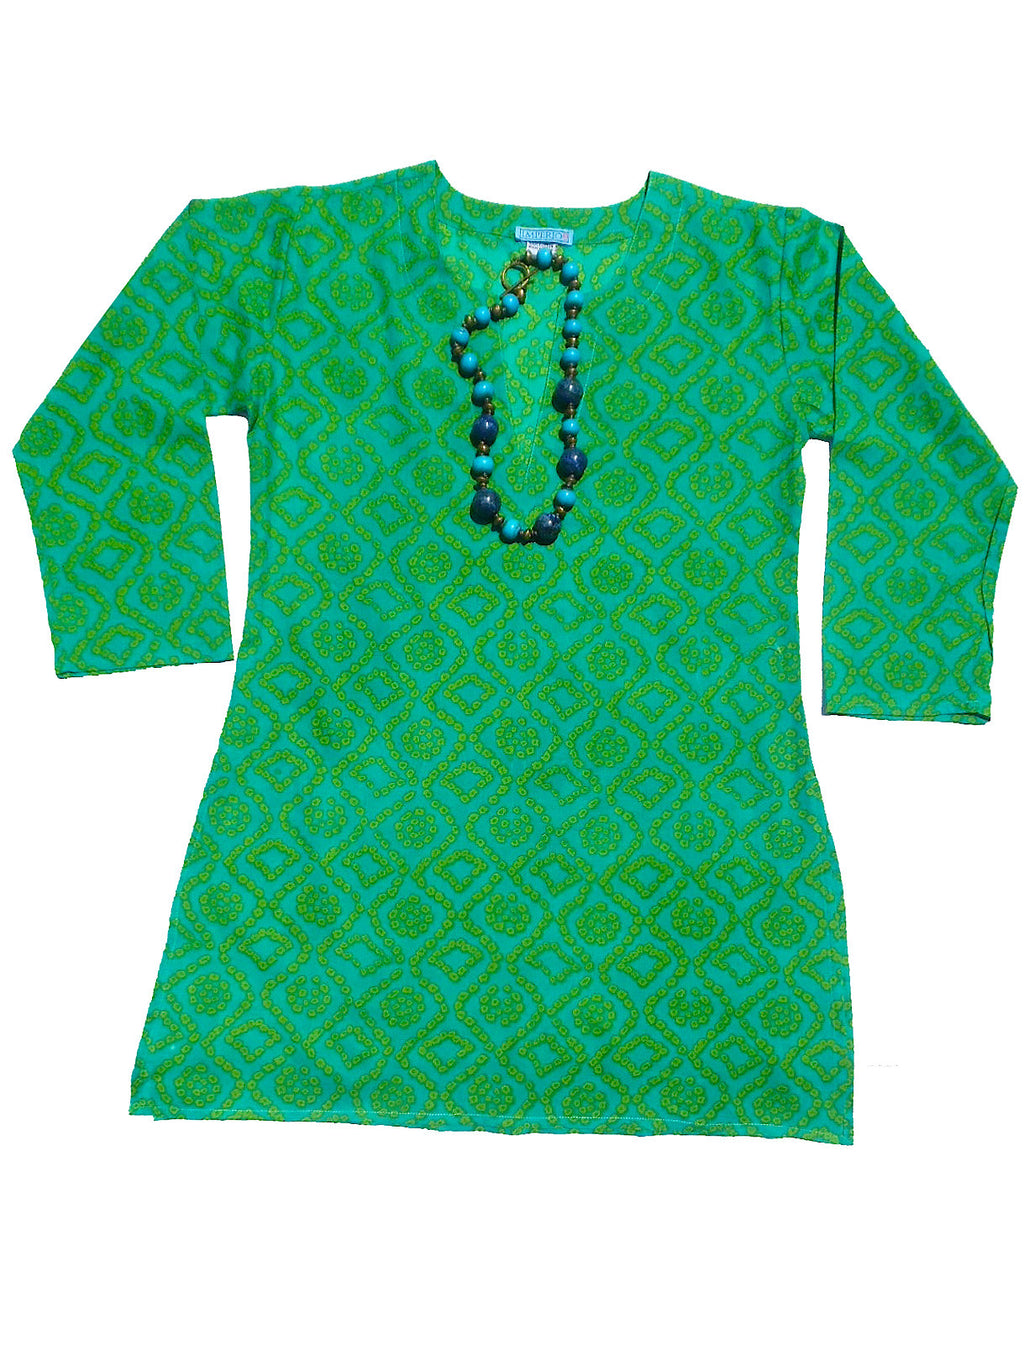 Raja Cotton Tunic Turquoise Green Tie Dye